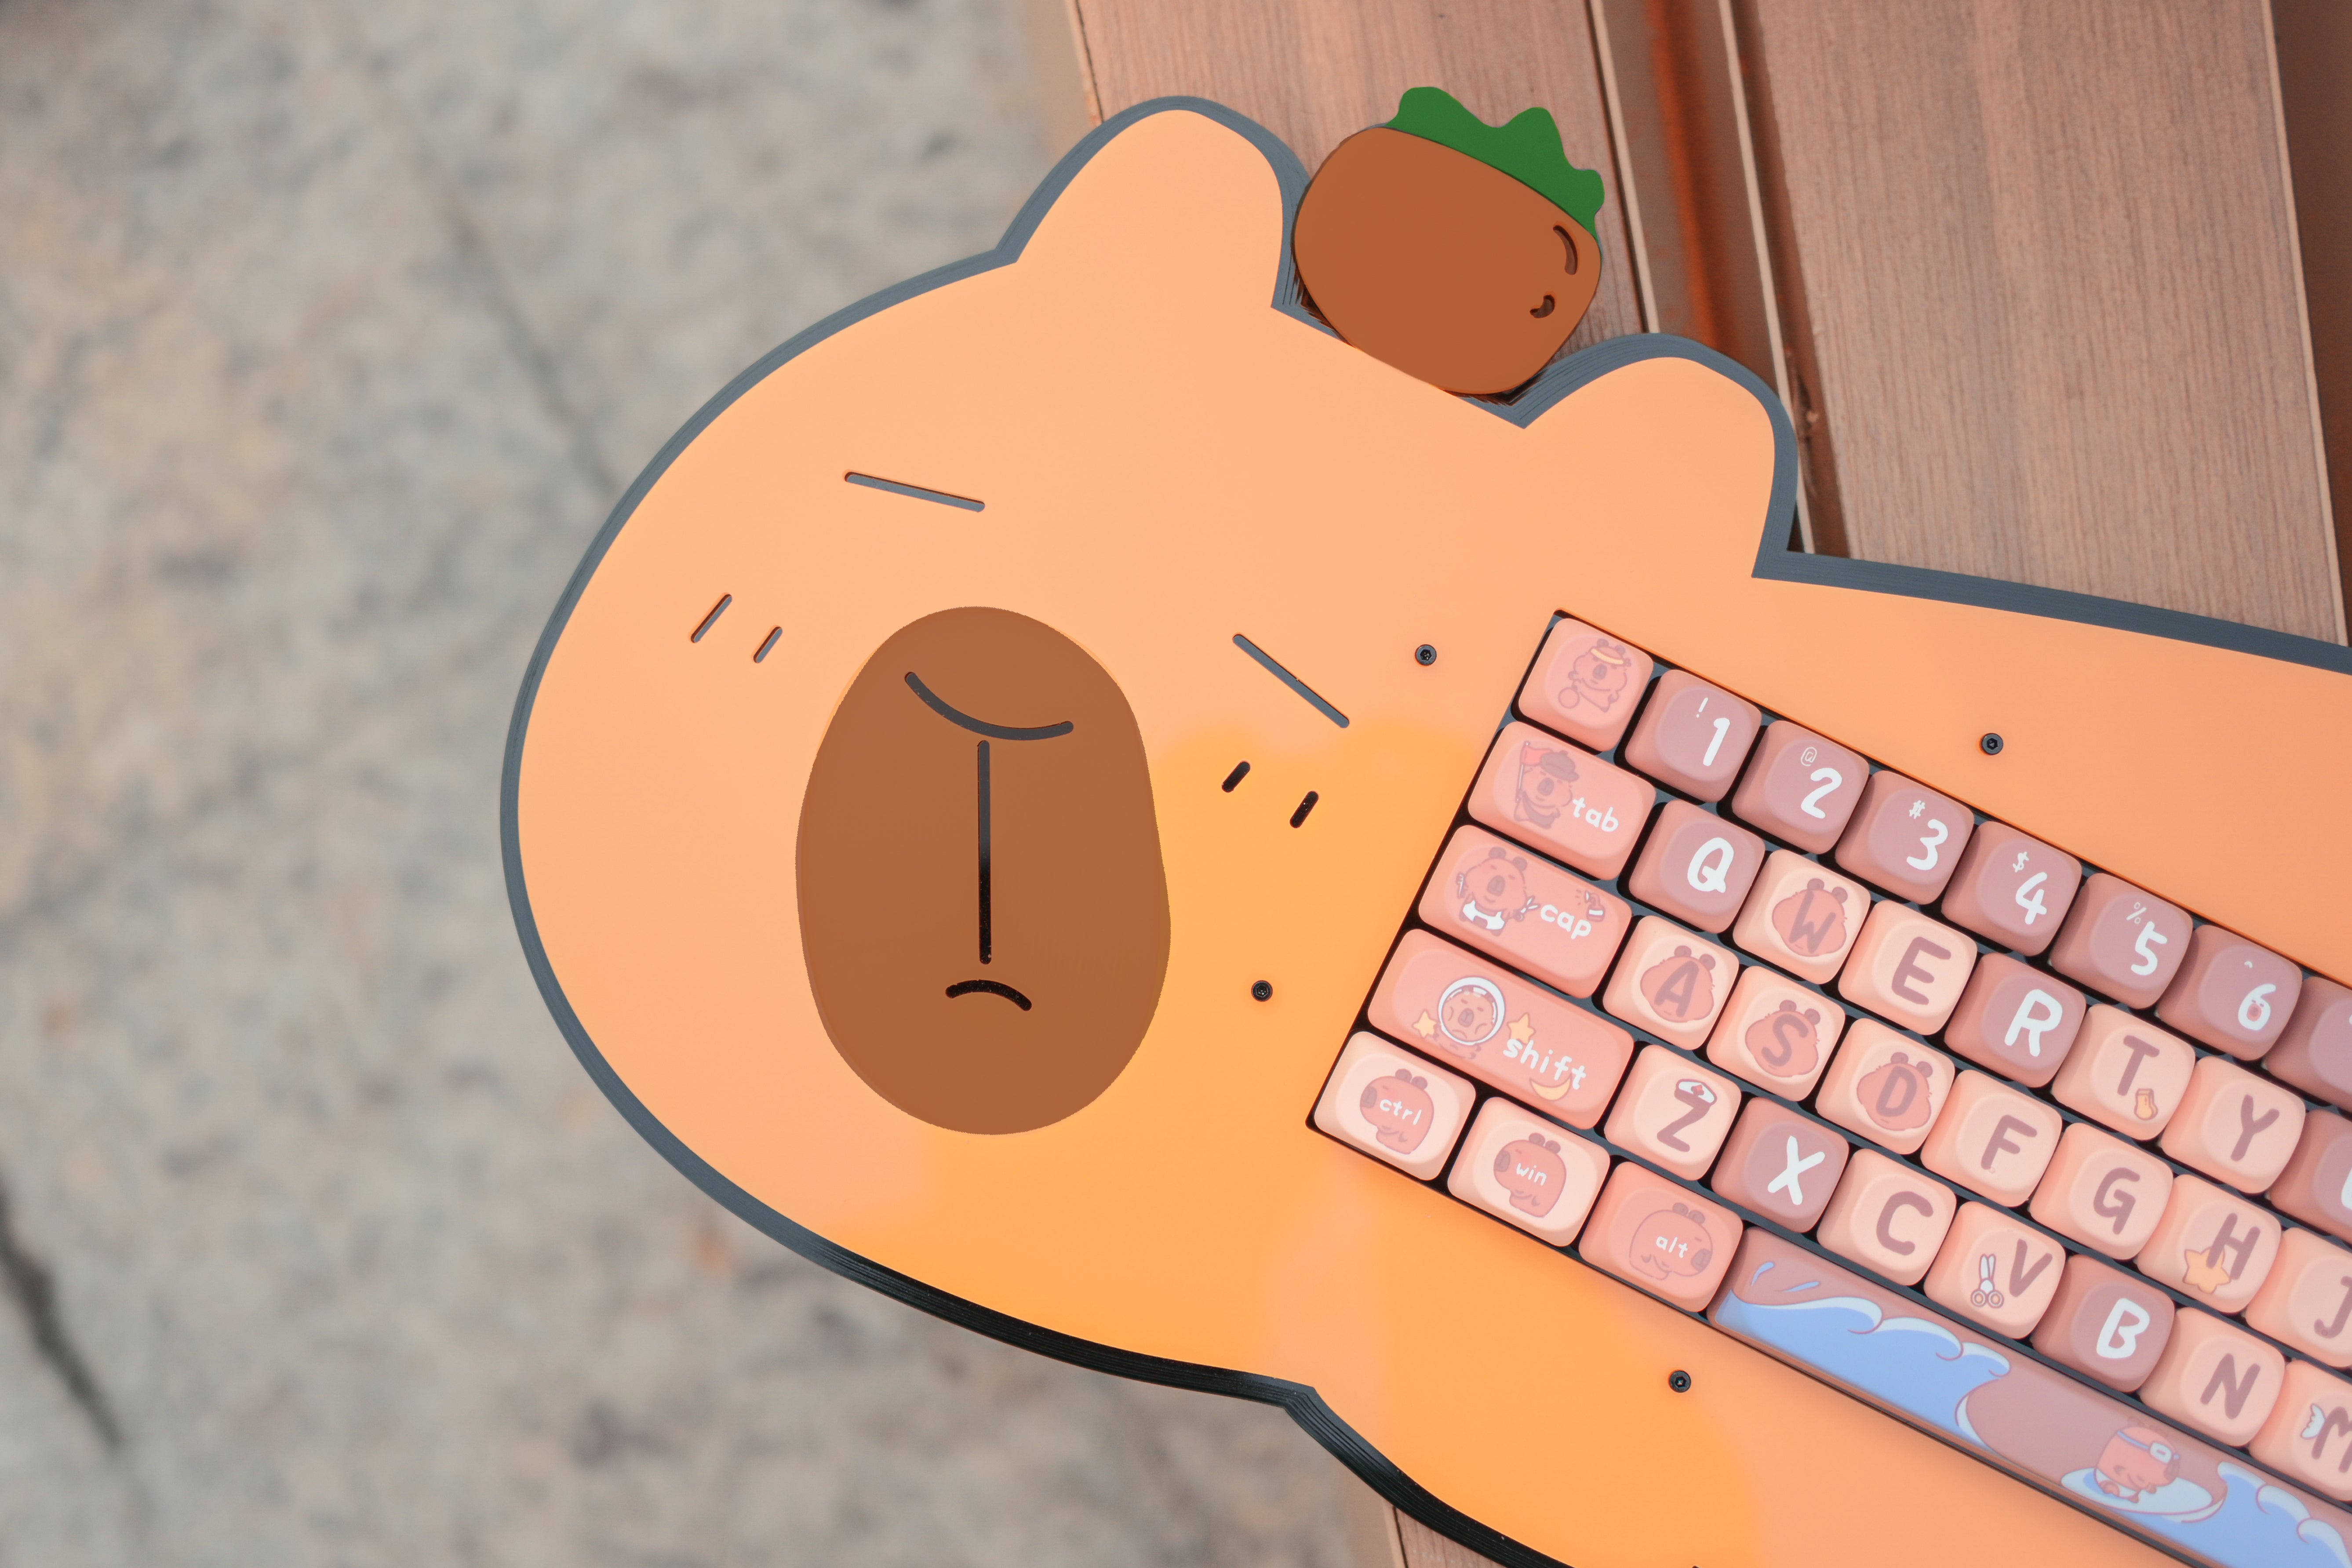 [In Stock] MOA Capybara PBT Keycap Set by Lelelab